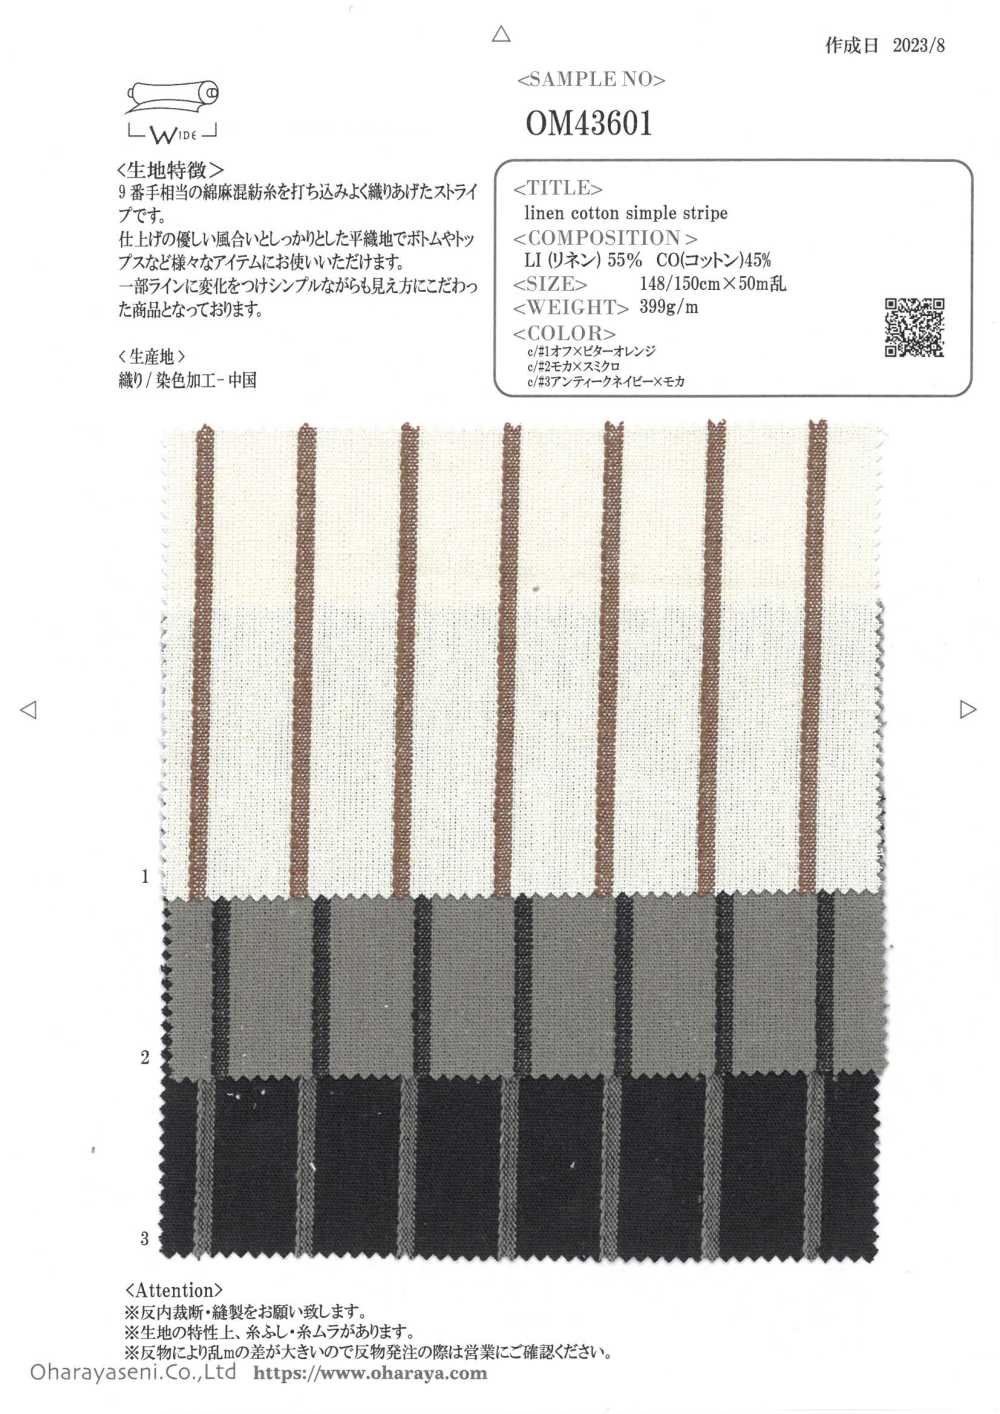 OM43601 linen cotton simple stripe[원단] Oharayaseni